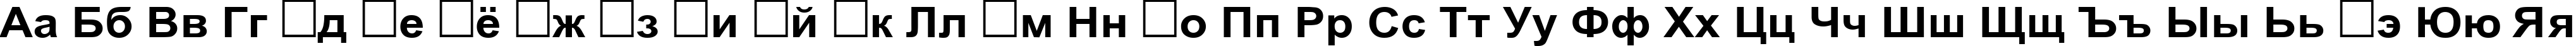 Пример написания русского алфавита шрифтом Arial Cyr 110B